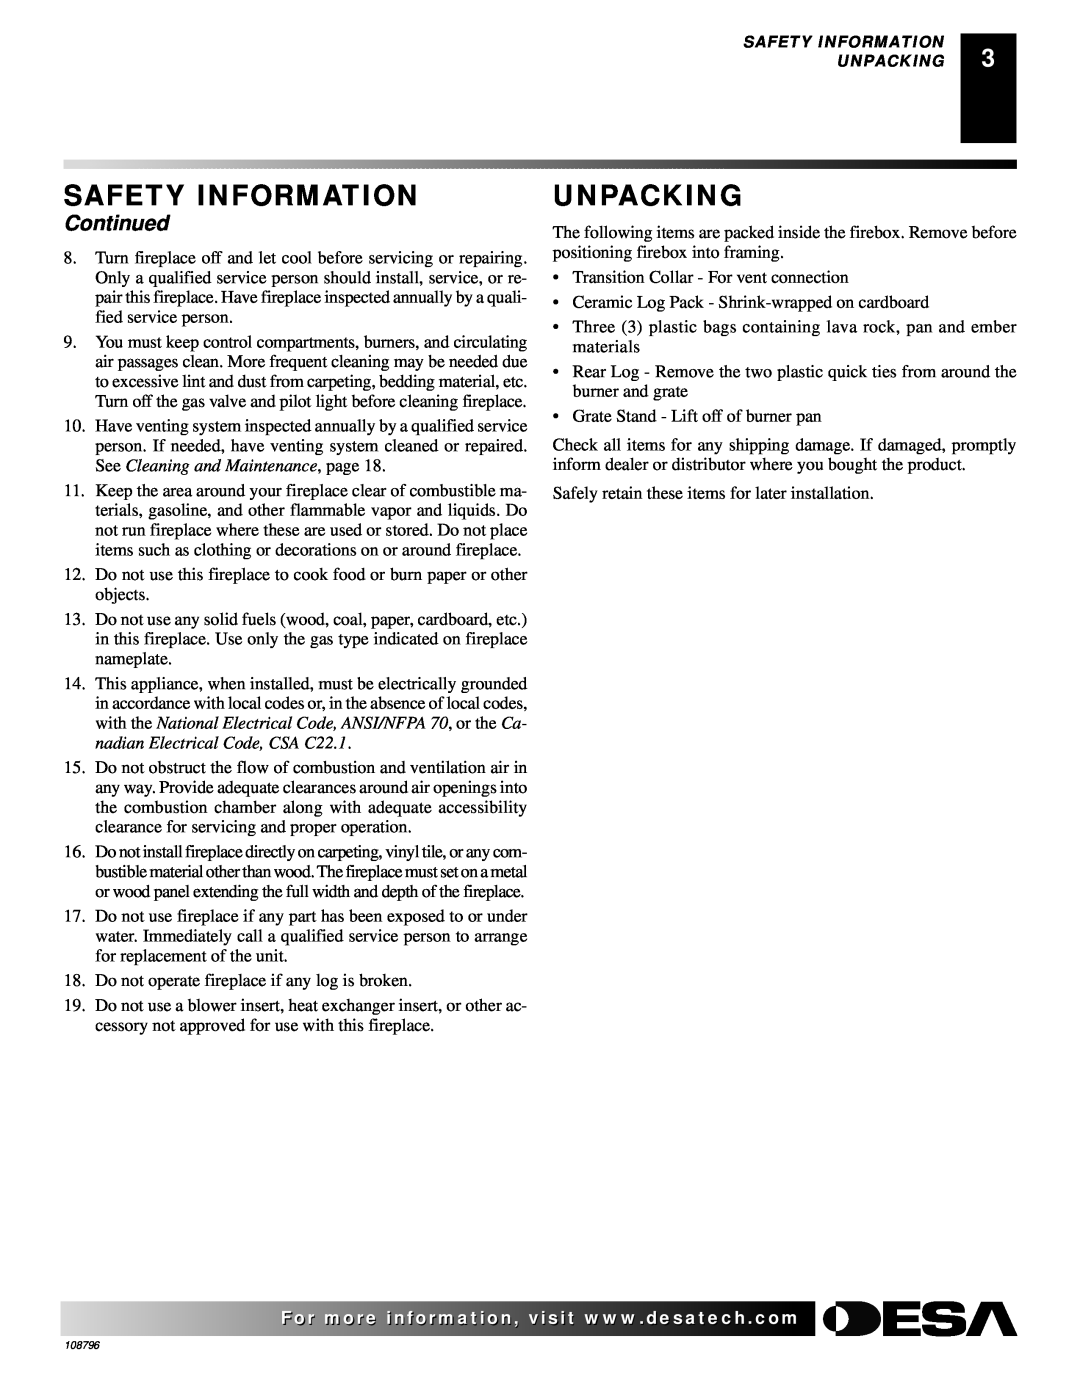 Desa VM42E, VM36E installation manual Unpacking, Continued, Safety Information 